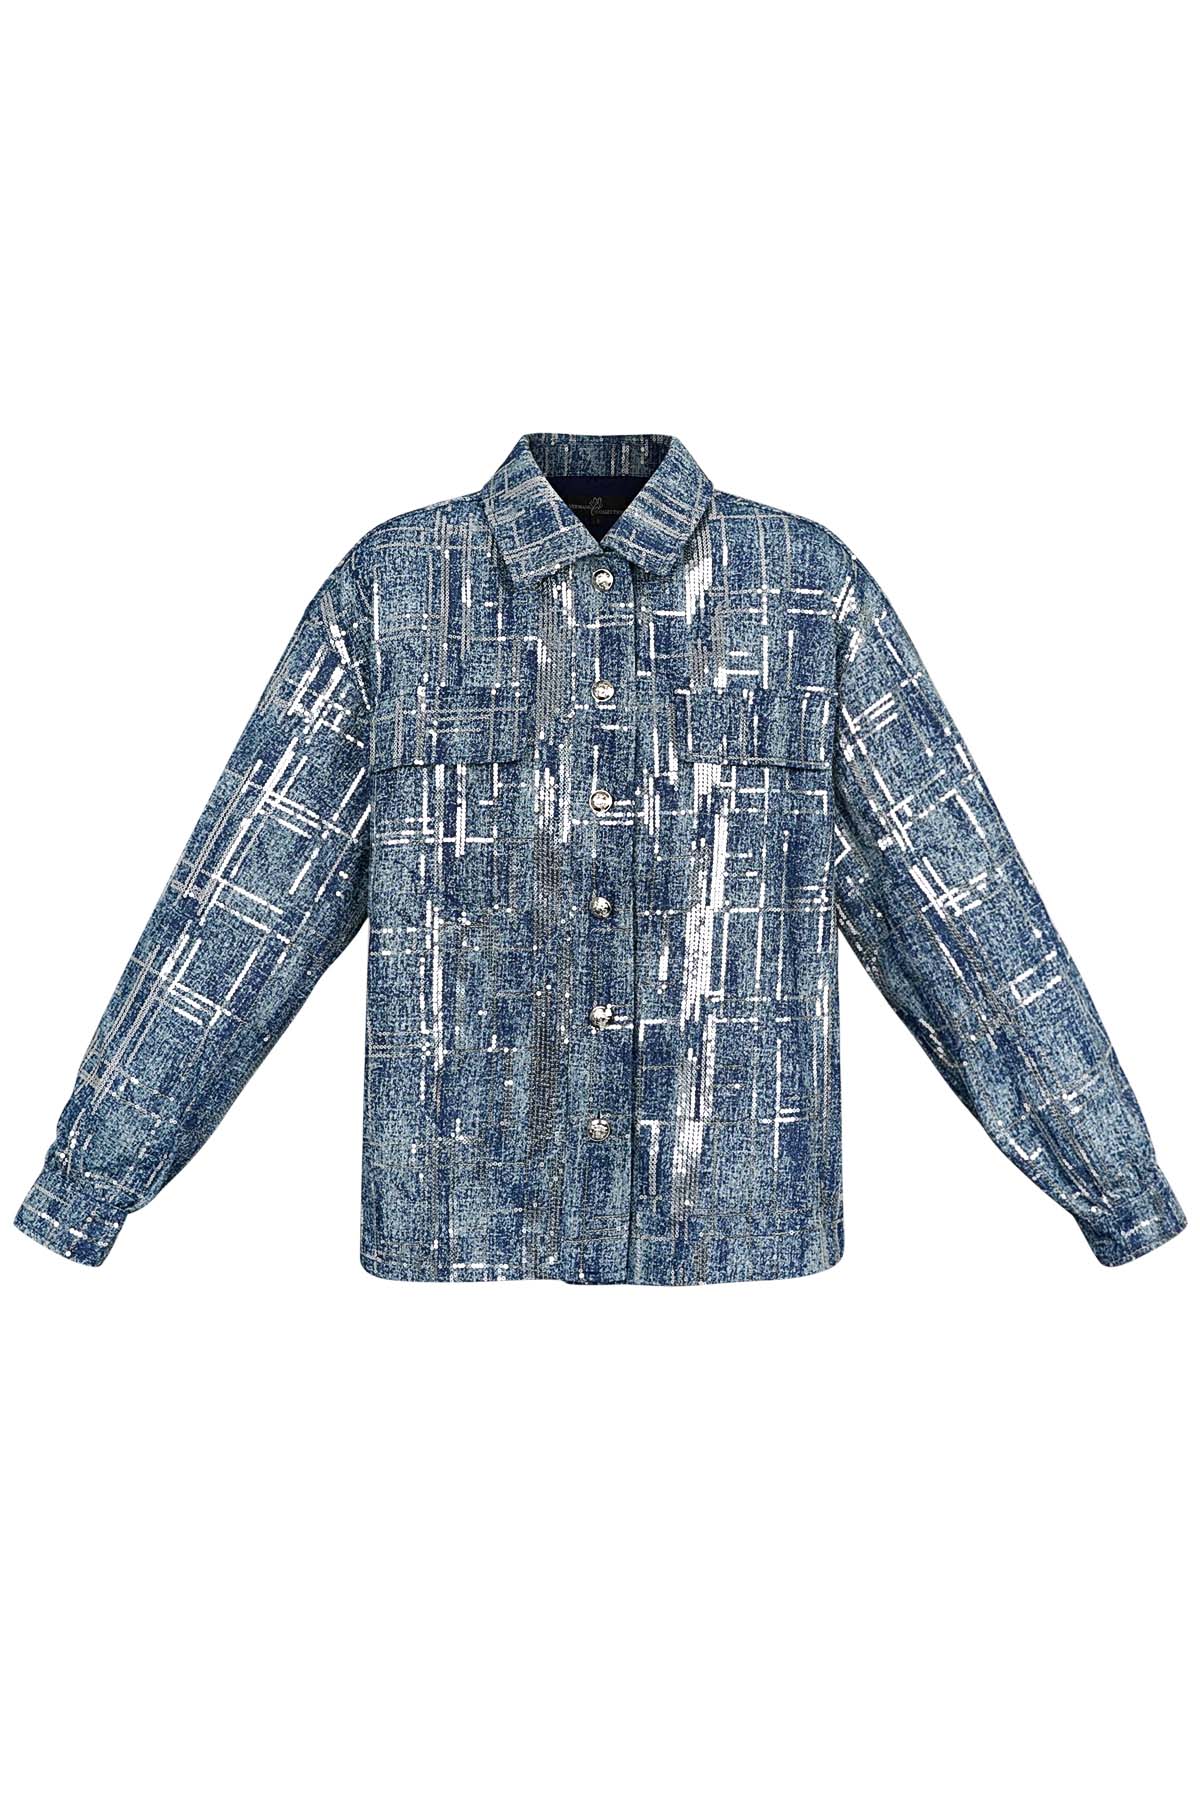 Jacket denim look with sequins - blue - L h5 